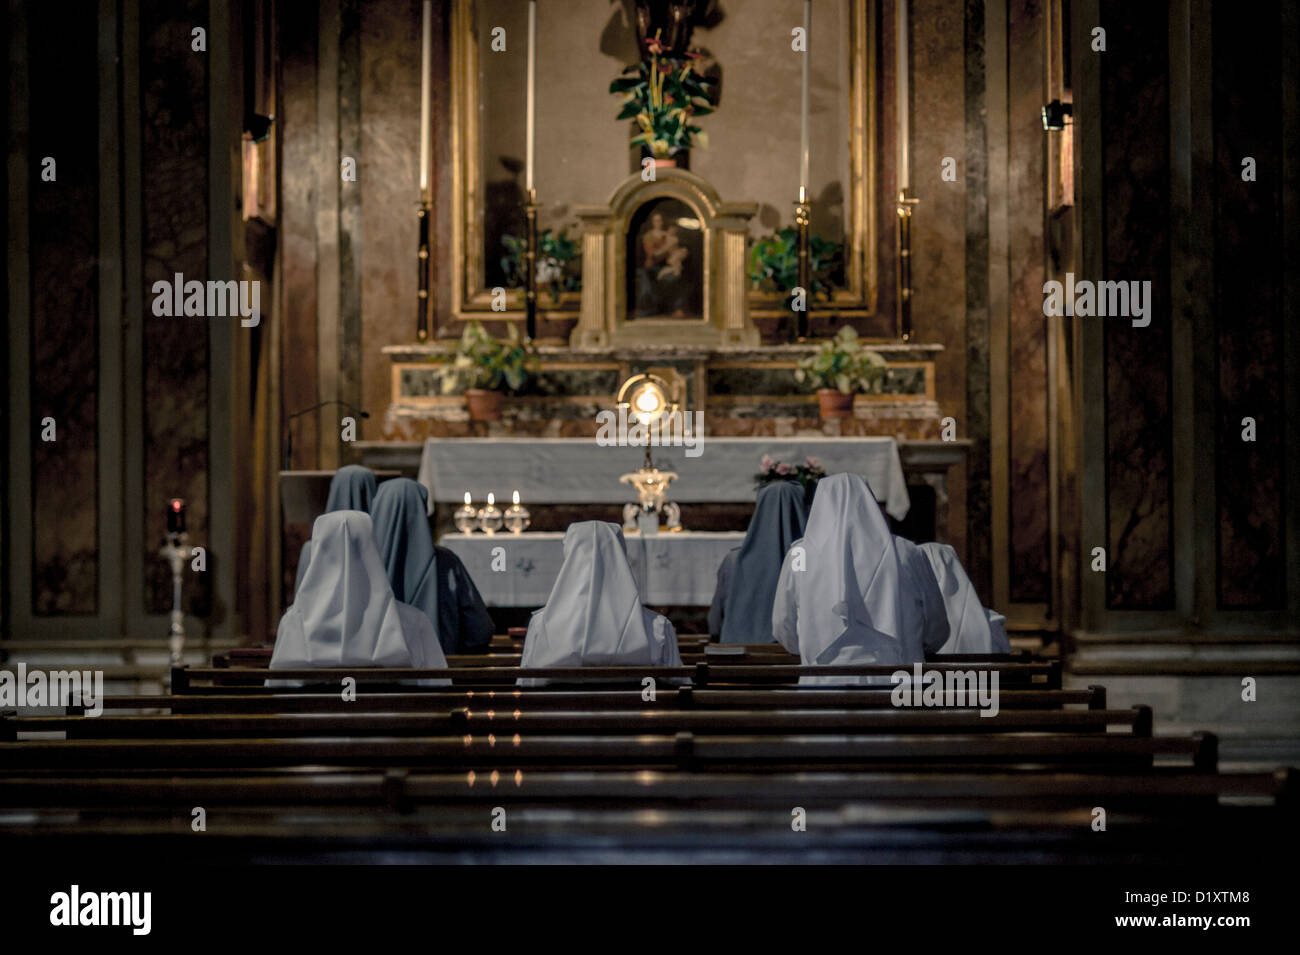 Nuns praying inside a church, Rome, Italy Stock Photo